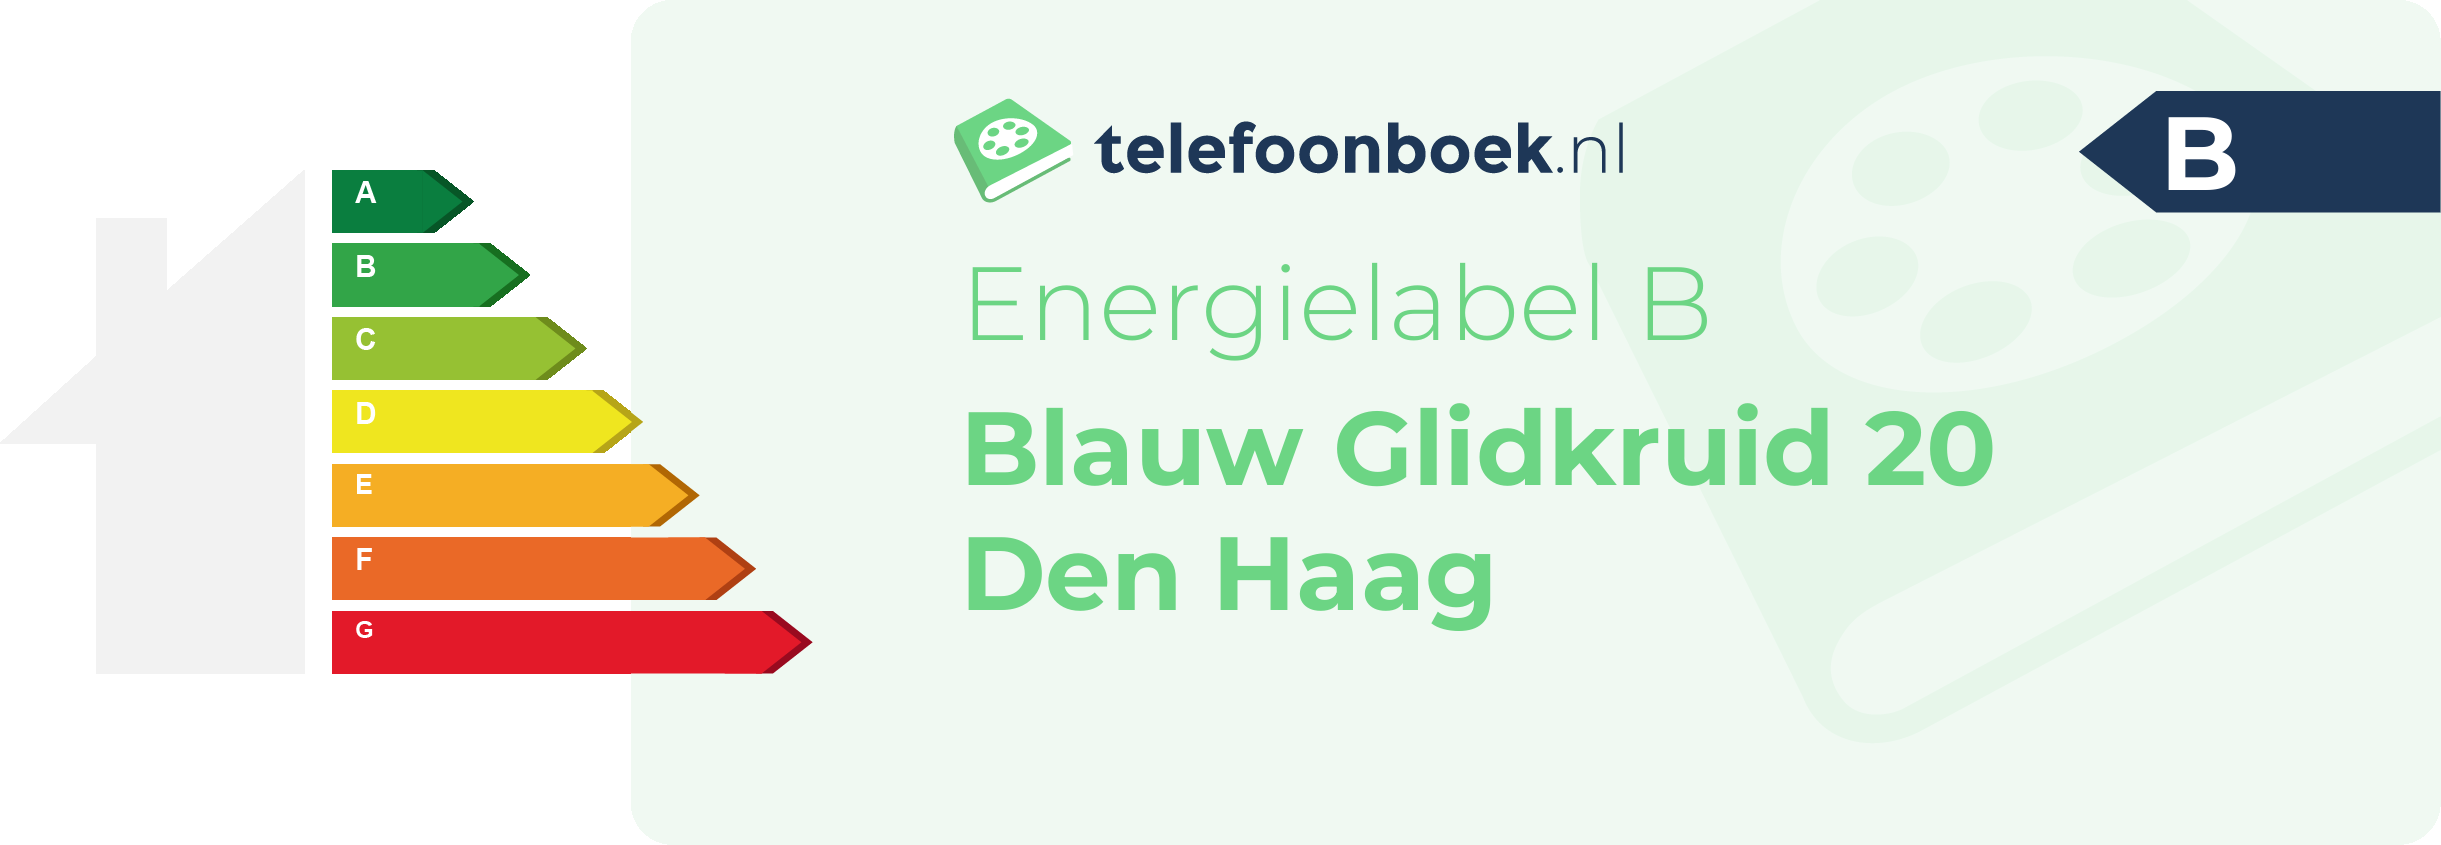 Energielabel Blauw Glidkruid 20 Den Haag